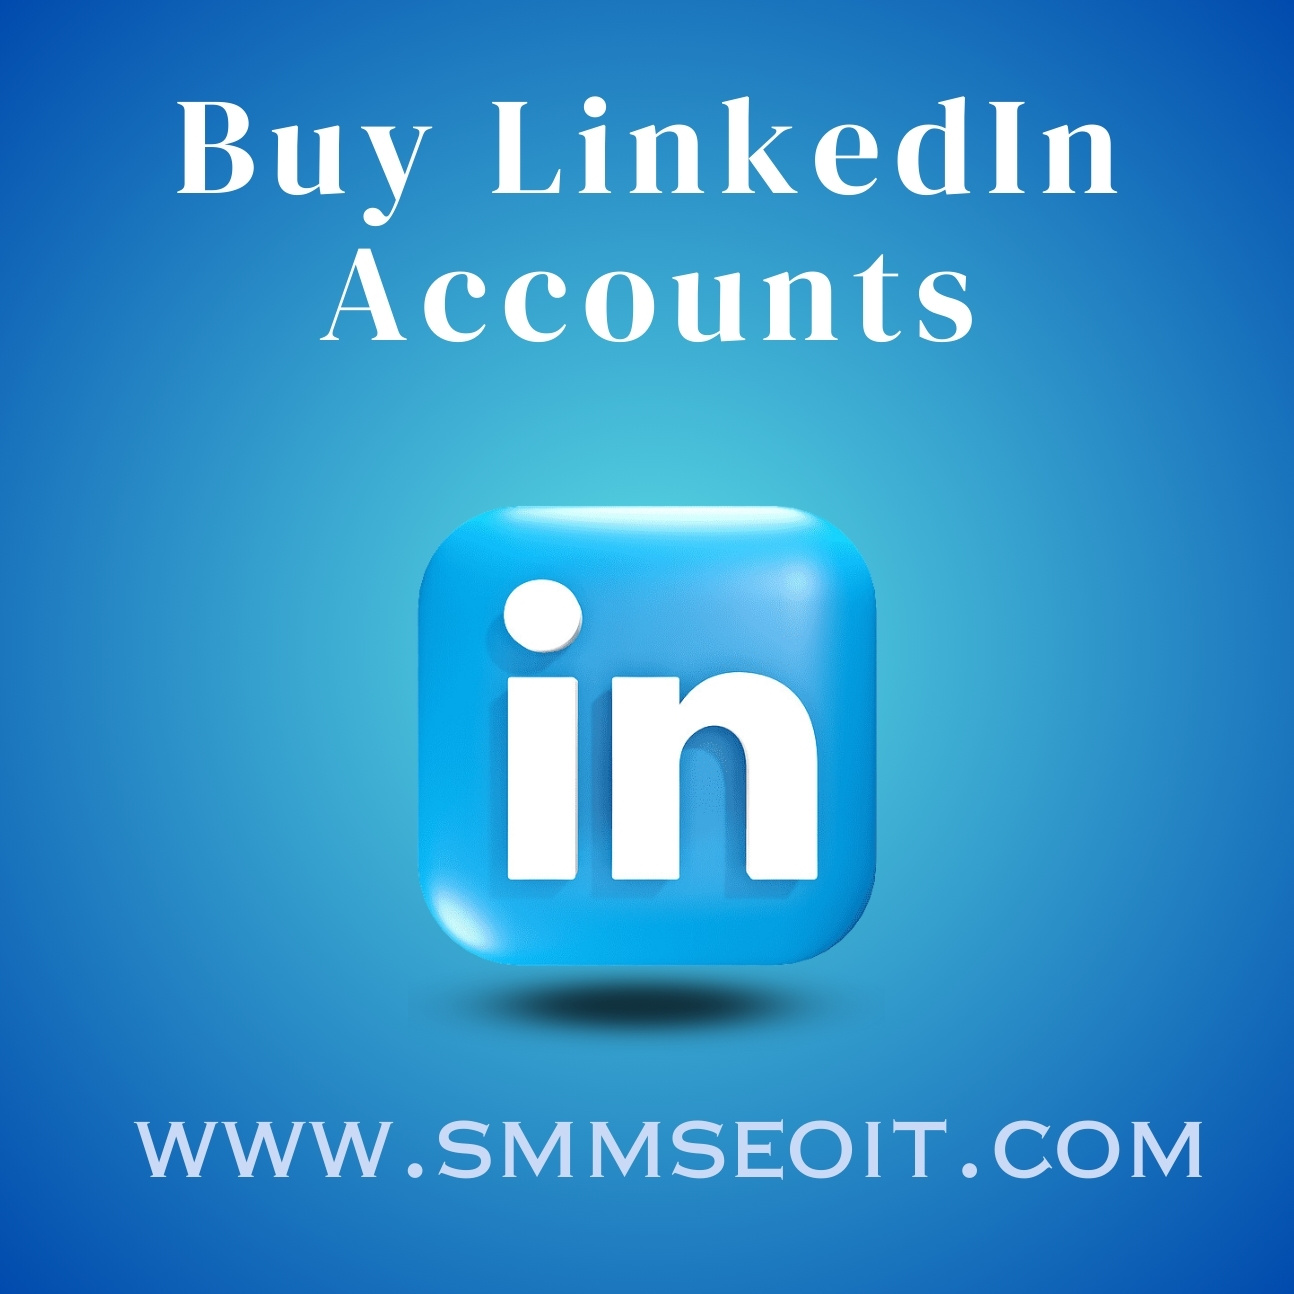 Buy LinkedIn Accounts - PVA LinkedIn Accounts for Sale